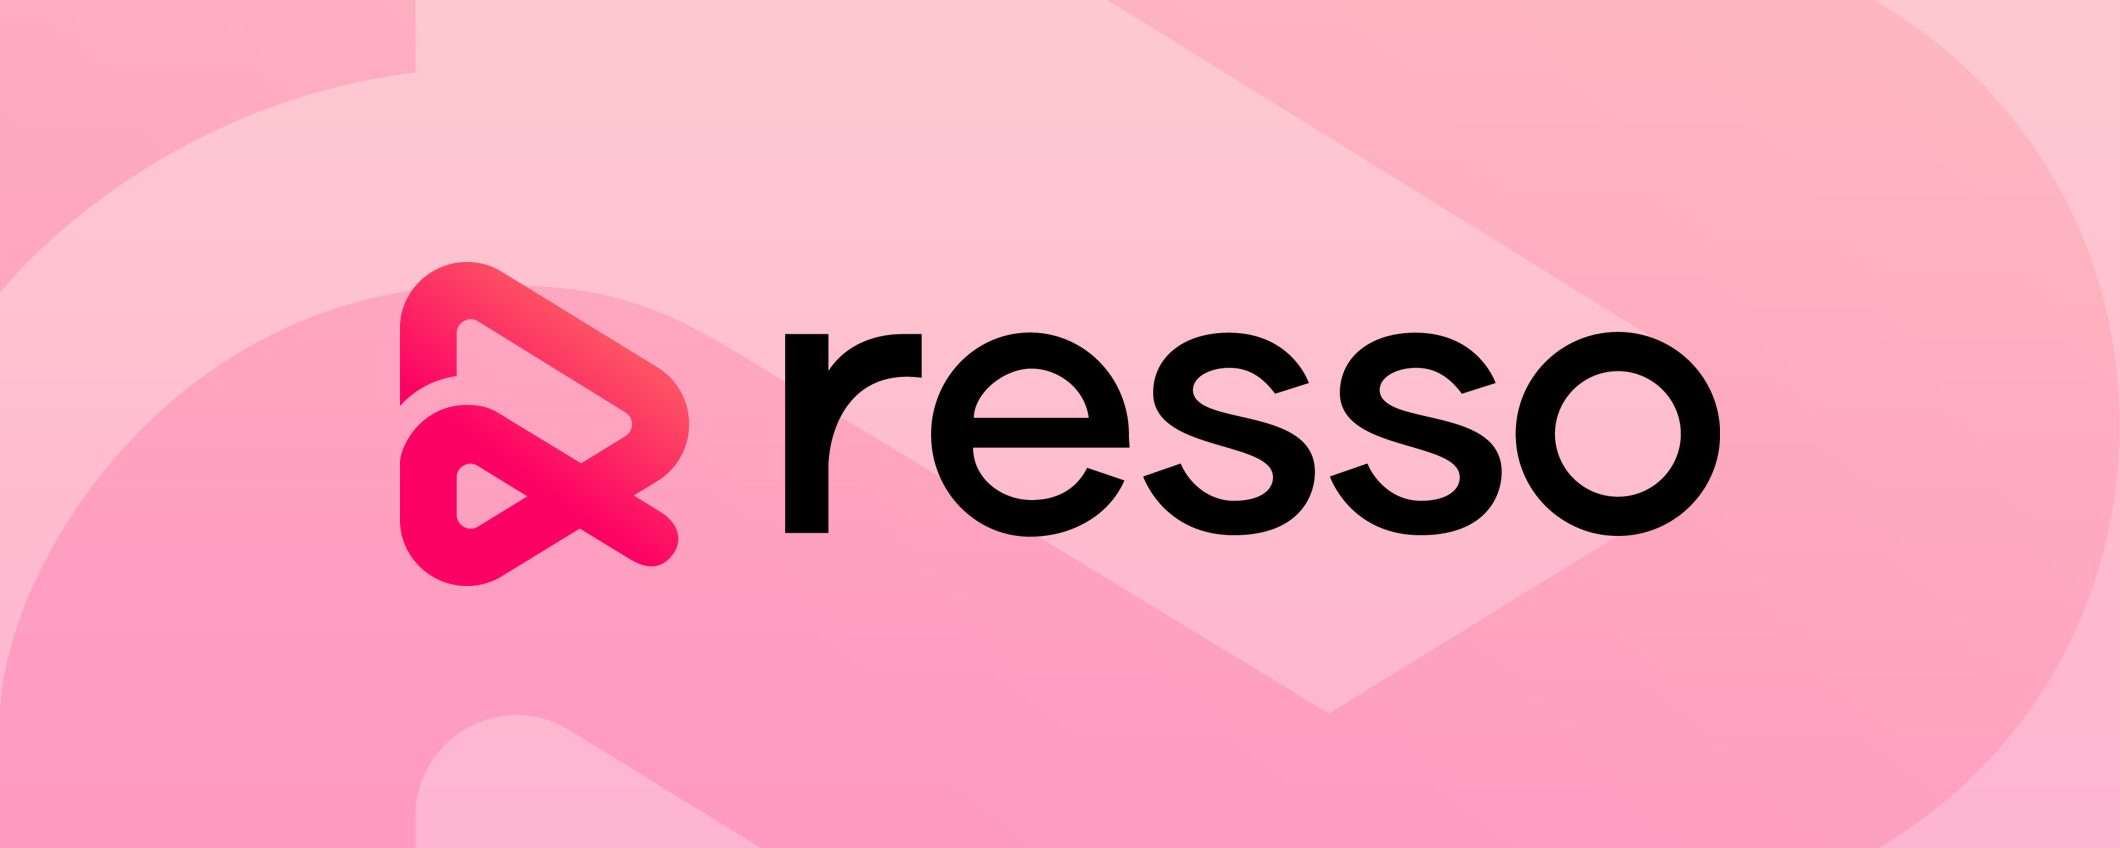 Resso (ByteDance): lo streaming musicale di TikTok